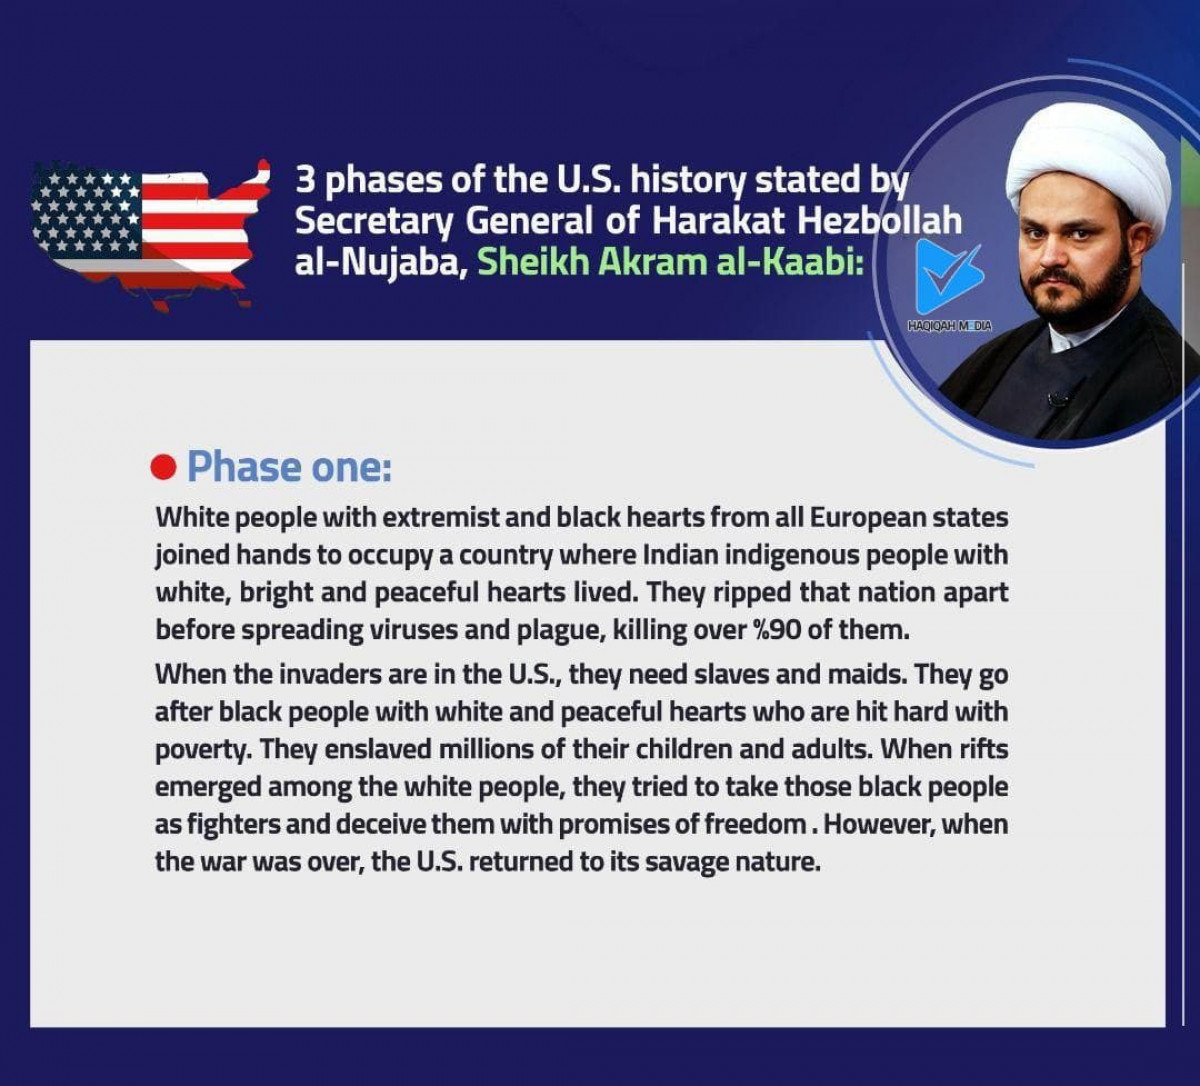 3 phases of the U.S. history stated by Secretary General of Harakat Hezbollah al-Nujaba, Sheikh Akram al-Kaabi 1